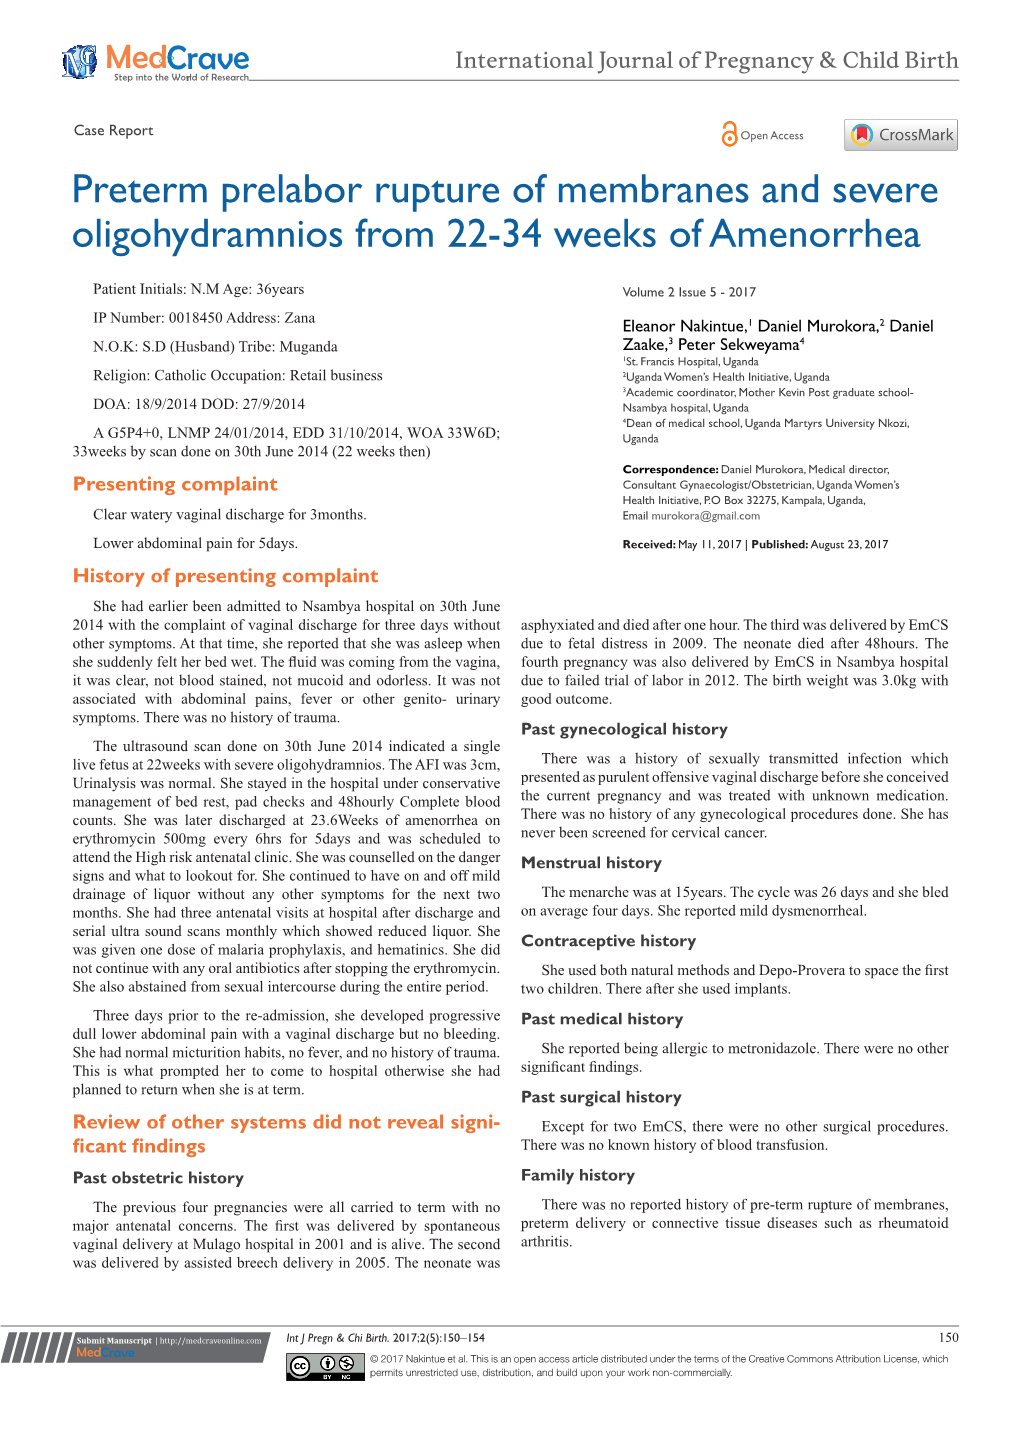 Preterm Prelabor Rupture of Membranes and Severe Oligohydramnios from 22-34 Weeks of Amenorrhea